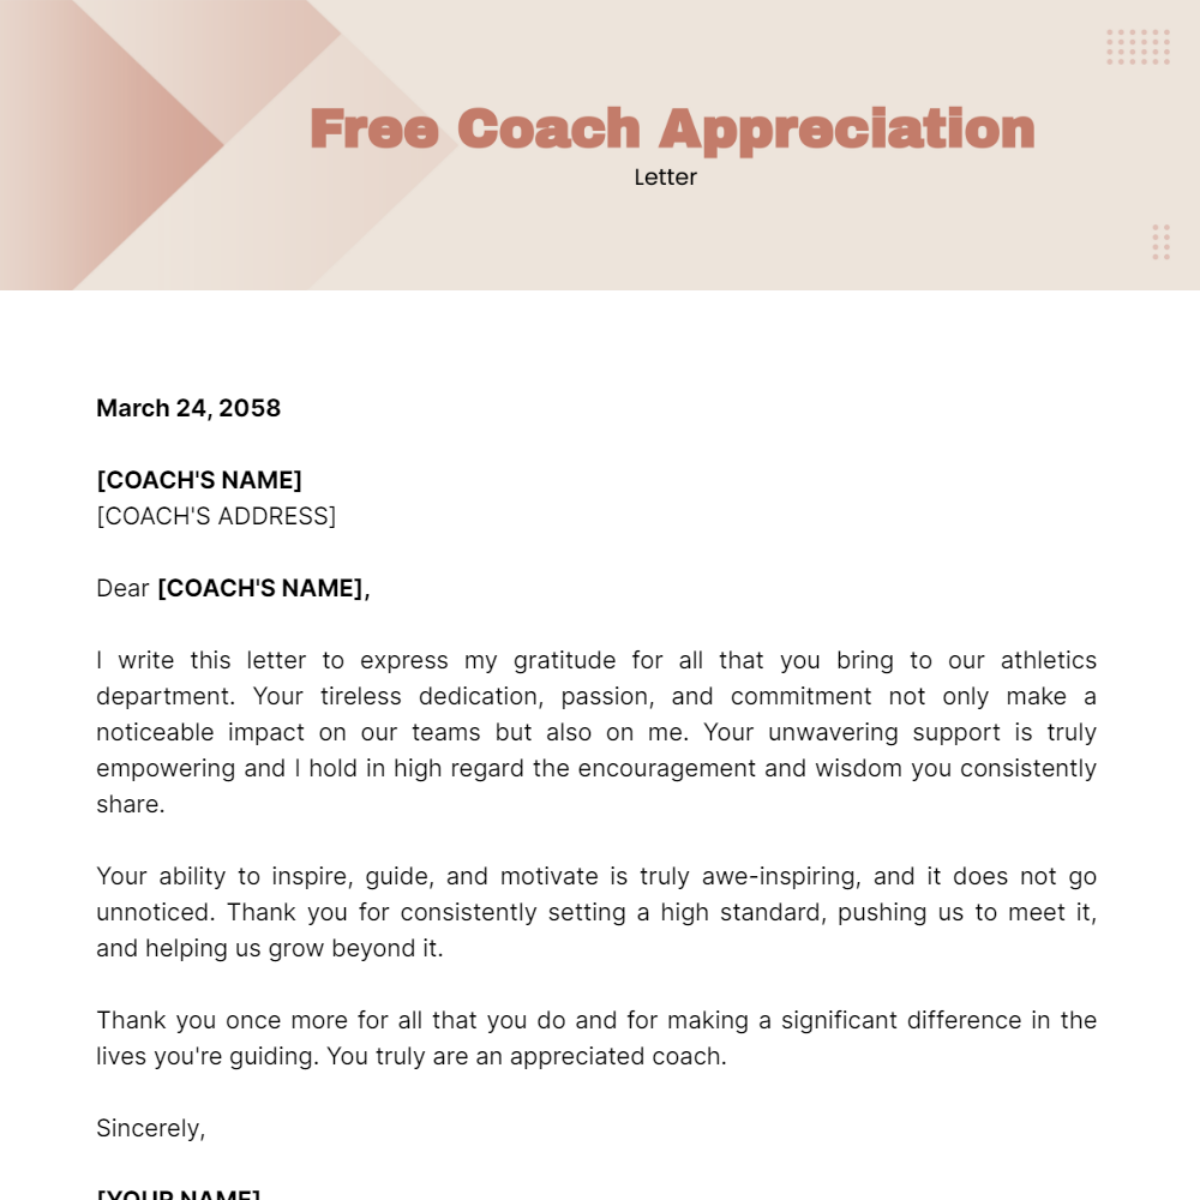 Coach Appreciation Letter Template